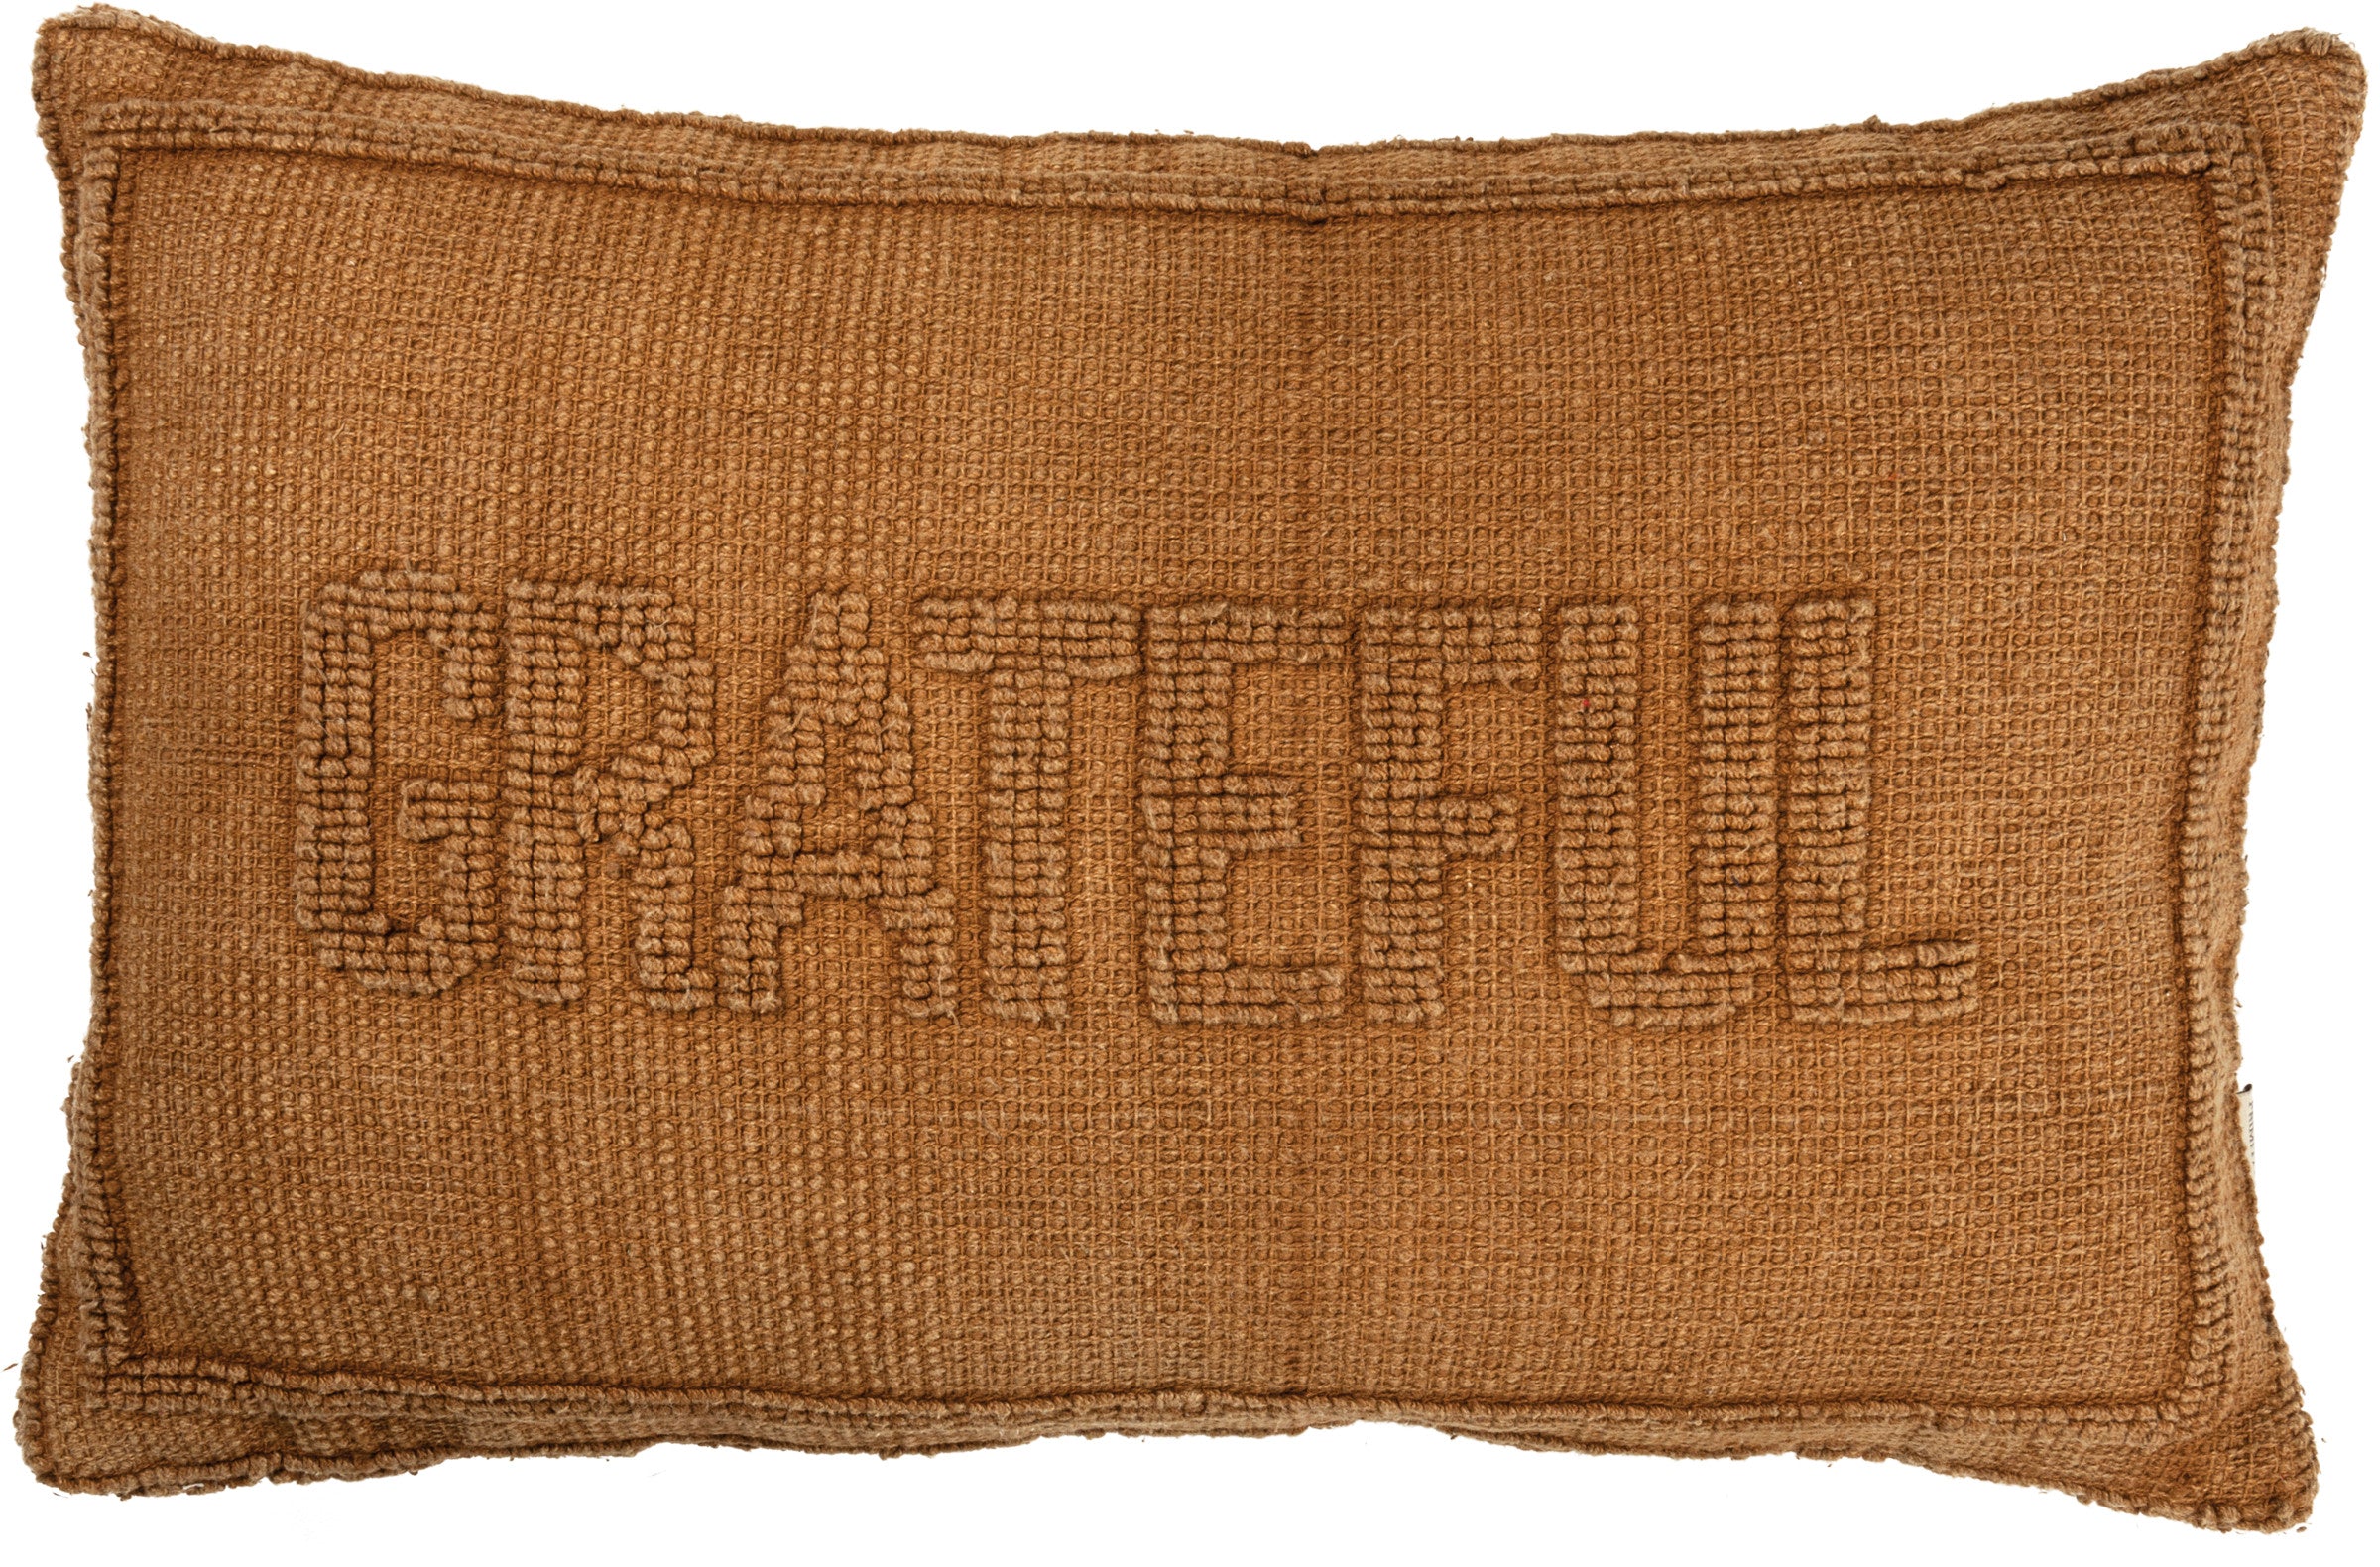 "Grateful" Knobby Pillow